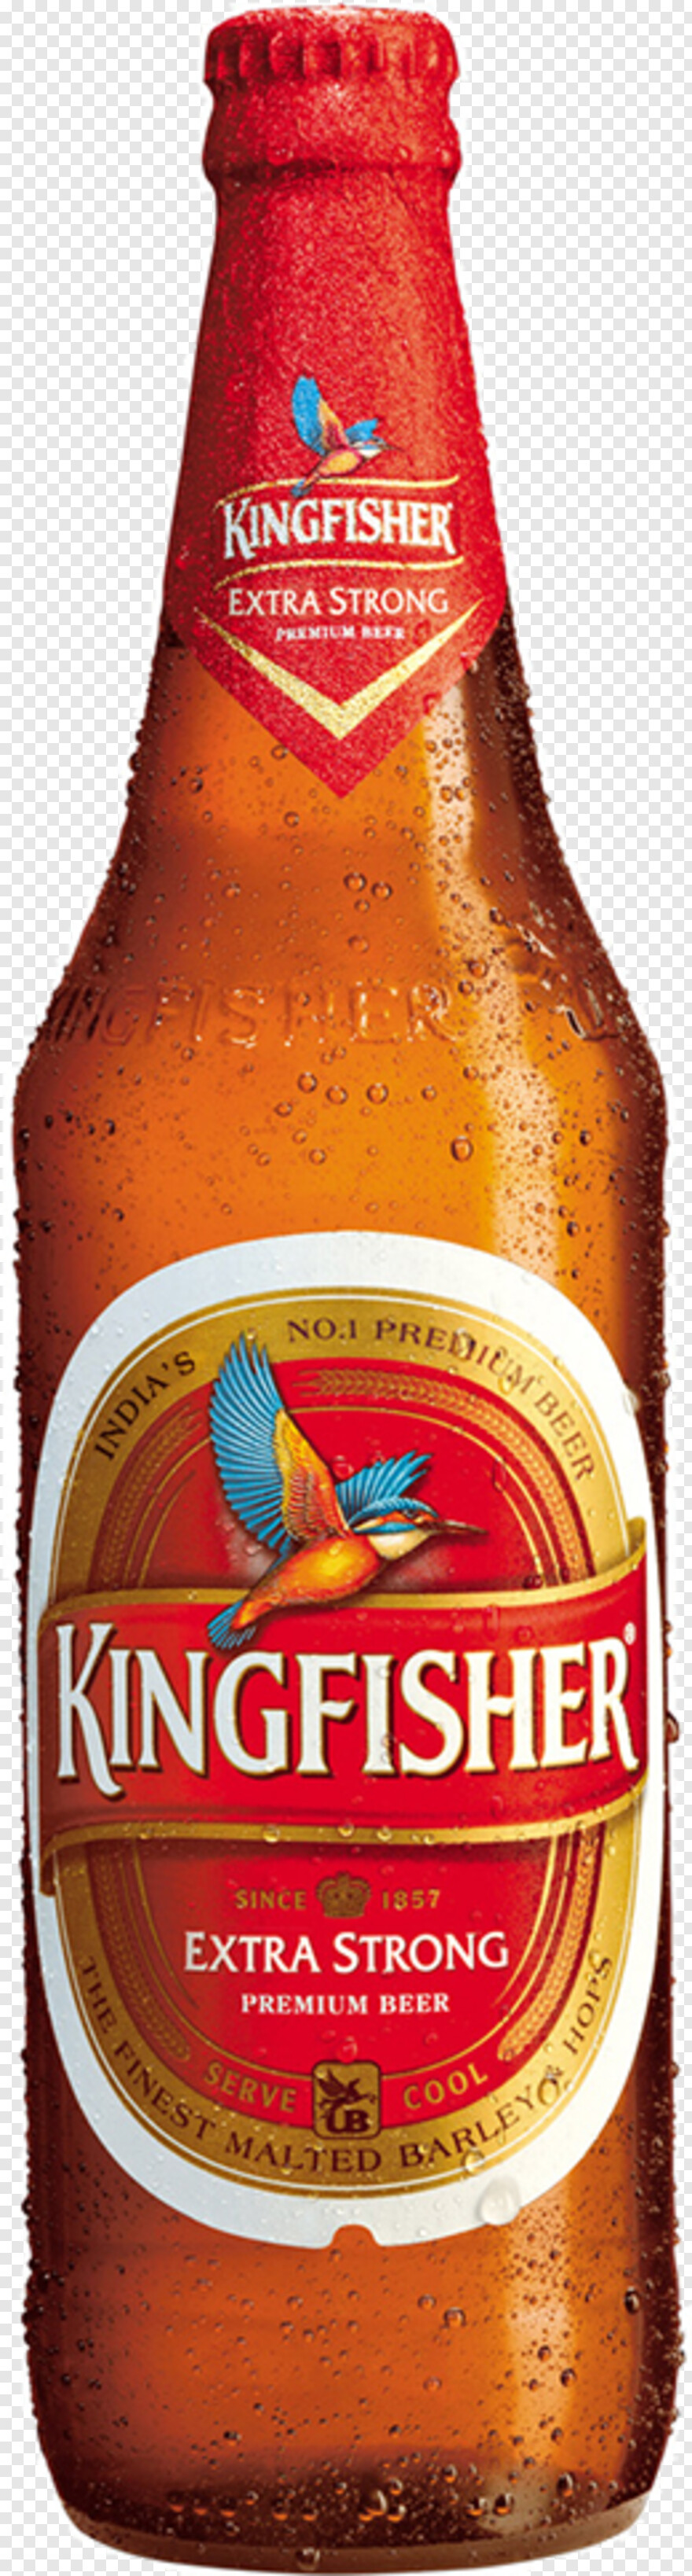 kingfisher-beer # 547662